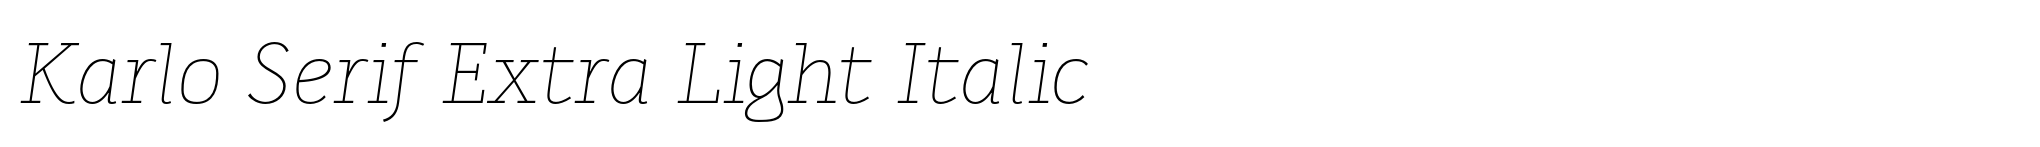 Karlo Serif Extra Light Italic image